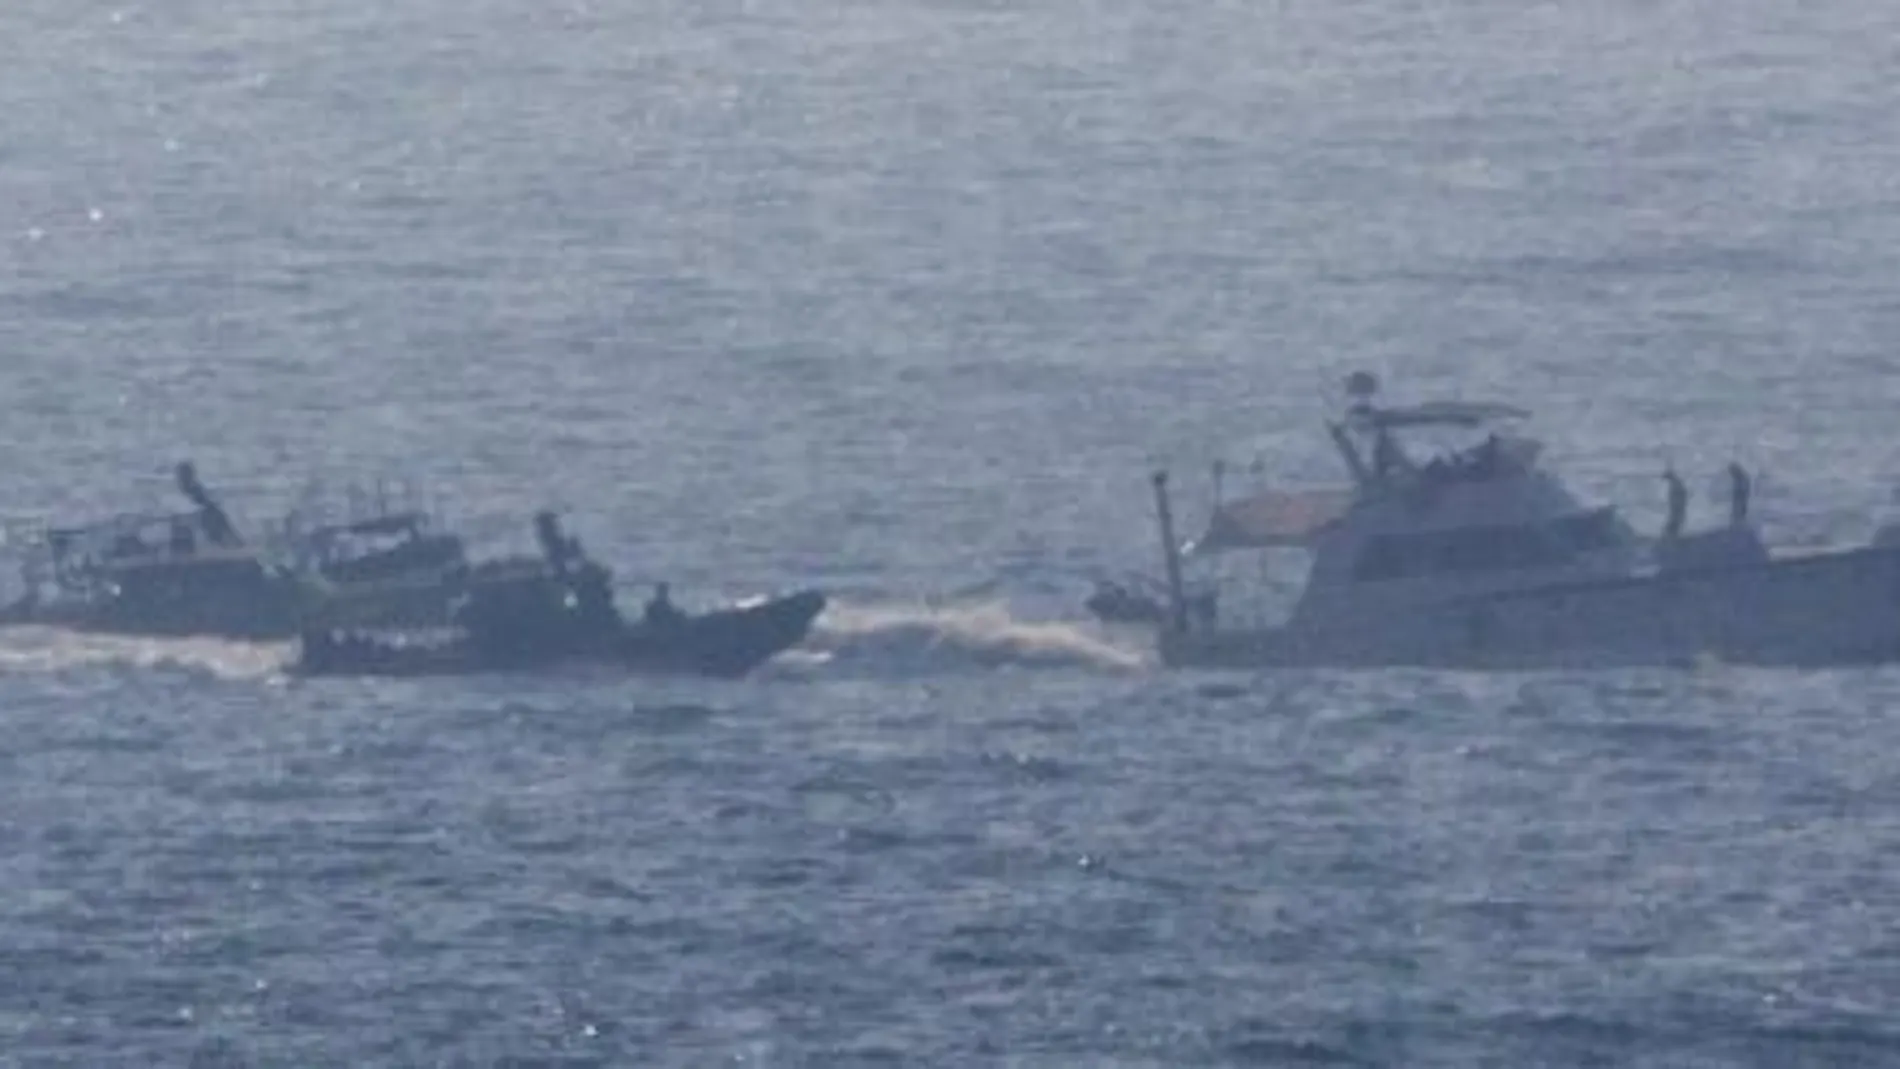 El barco francés de la Flotilla de la Libertad es escoltado por dos barcos de la Marina israelí.